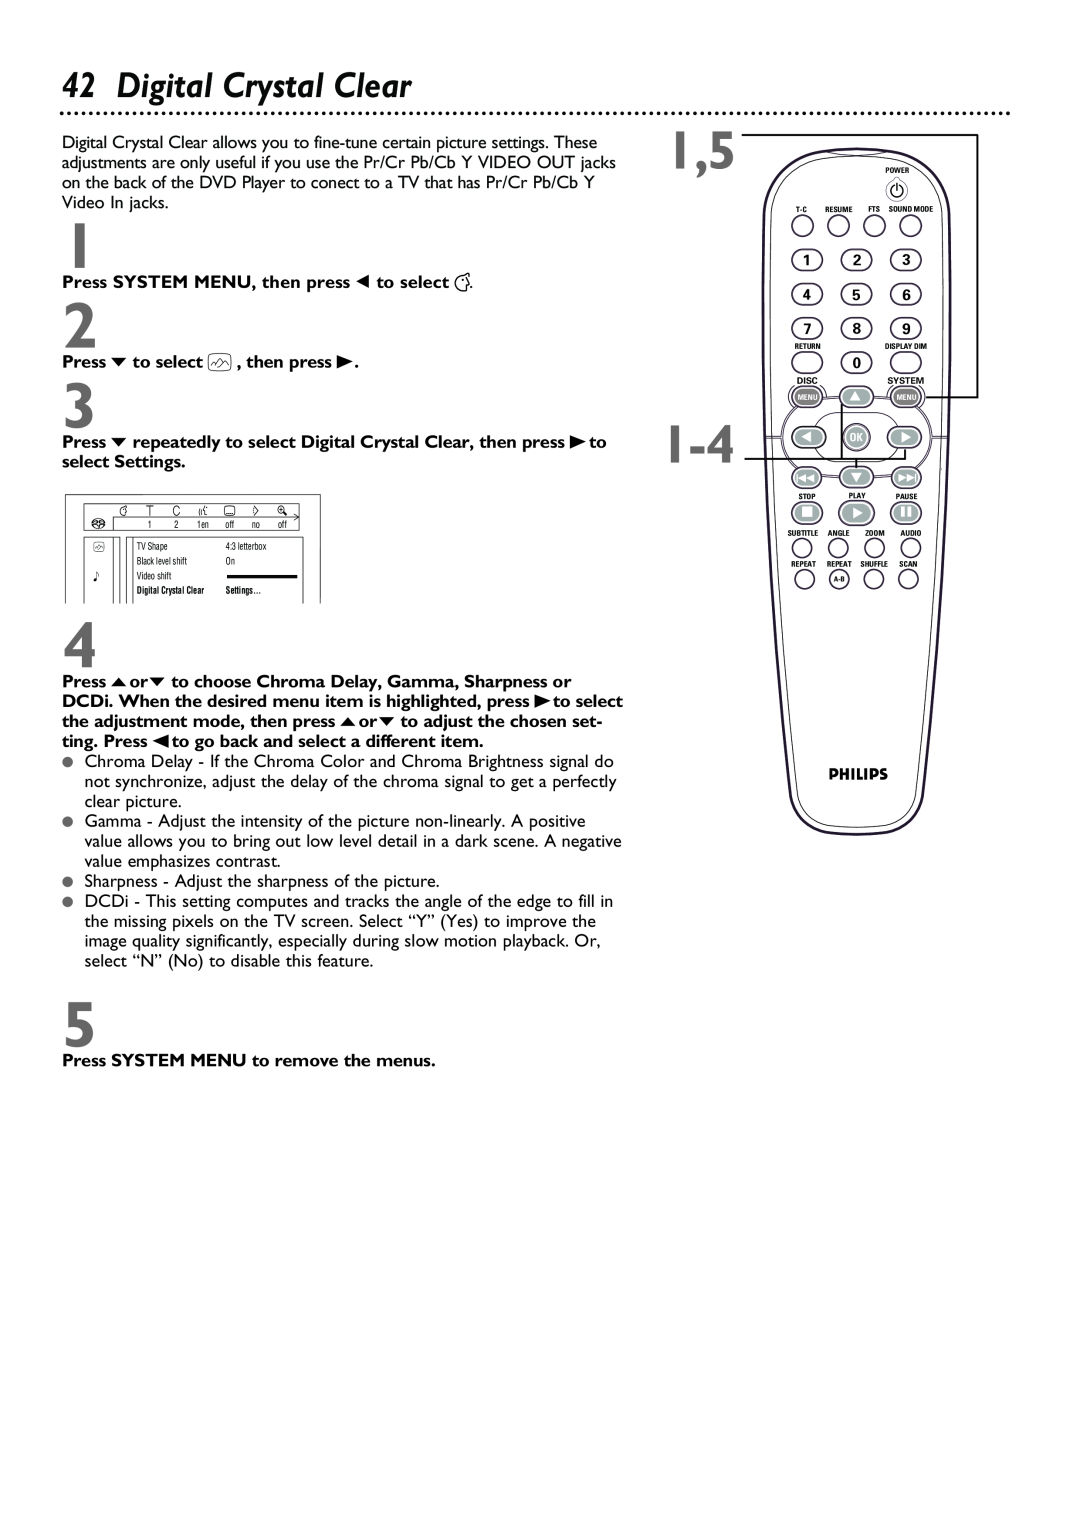 Philips DVD962SA owner manual 1,5, Digital Crystal Clear 